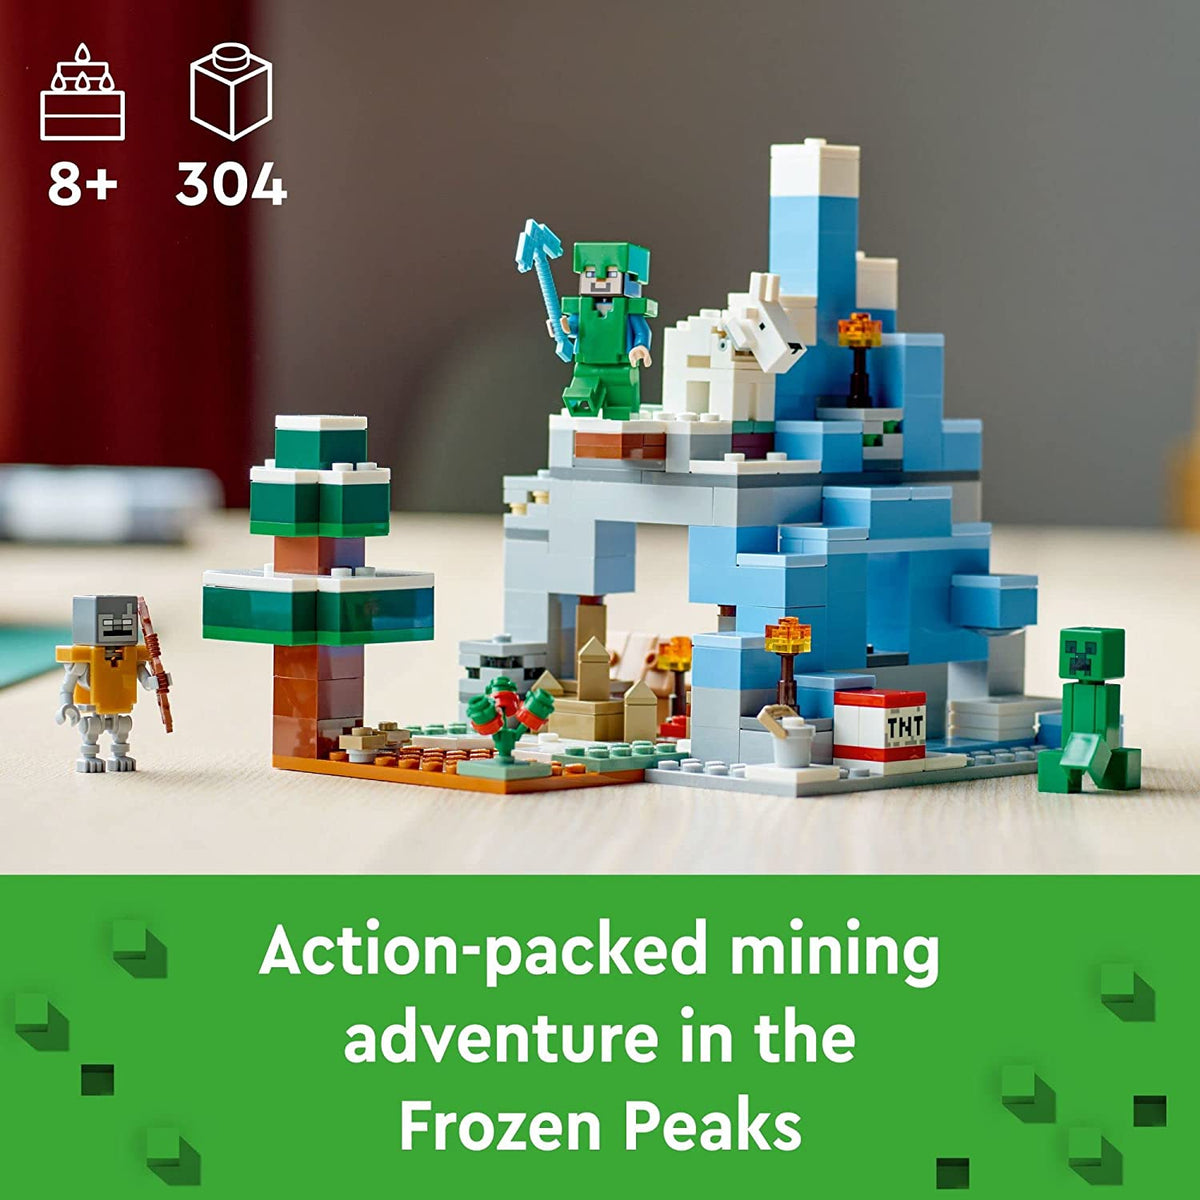 LEGO Minecraft: The Frozen Peaks (21243)